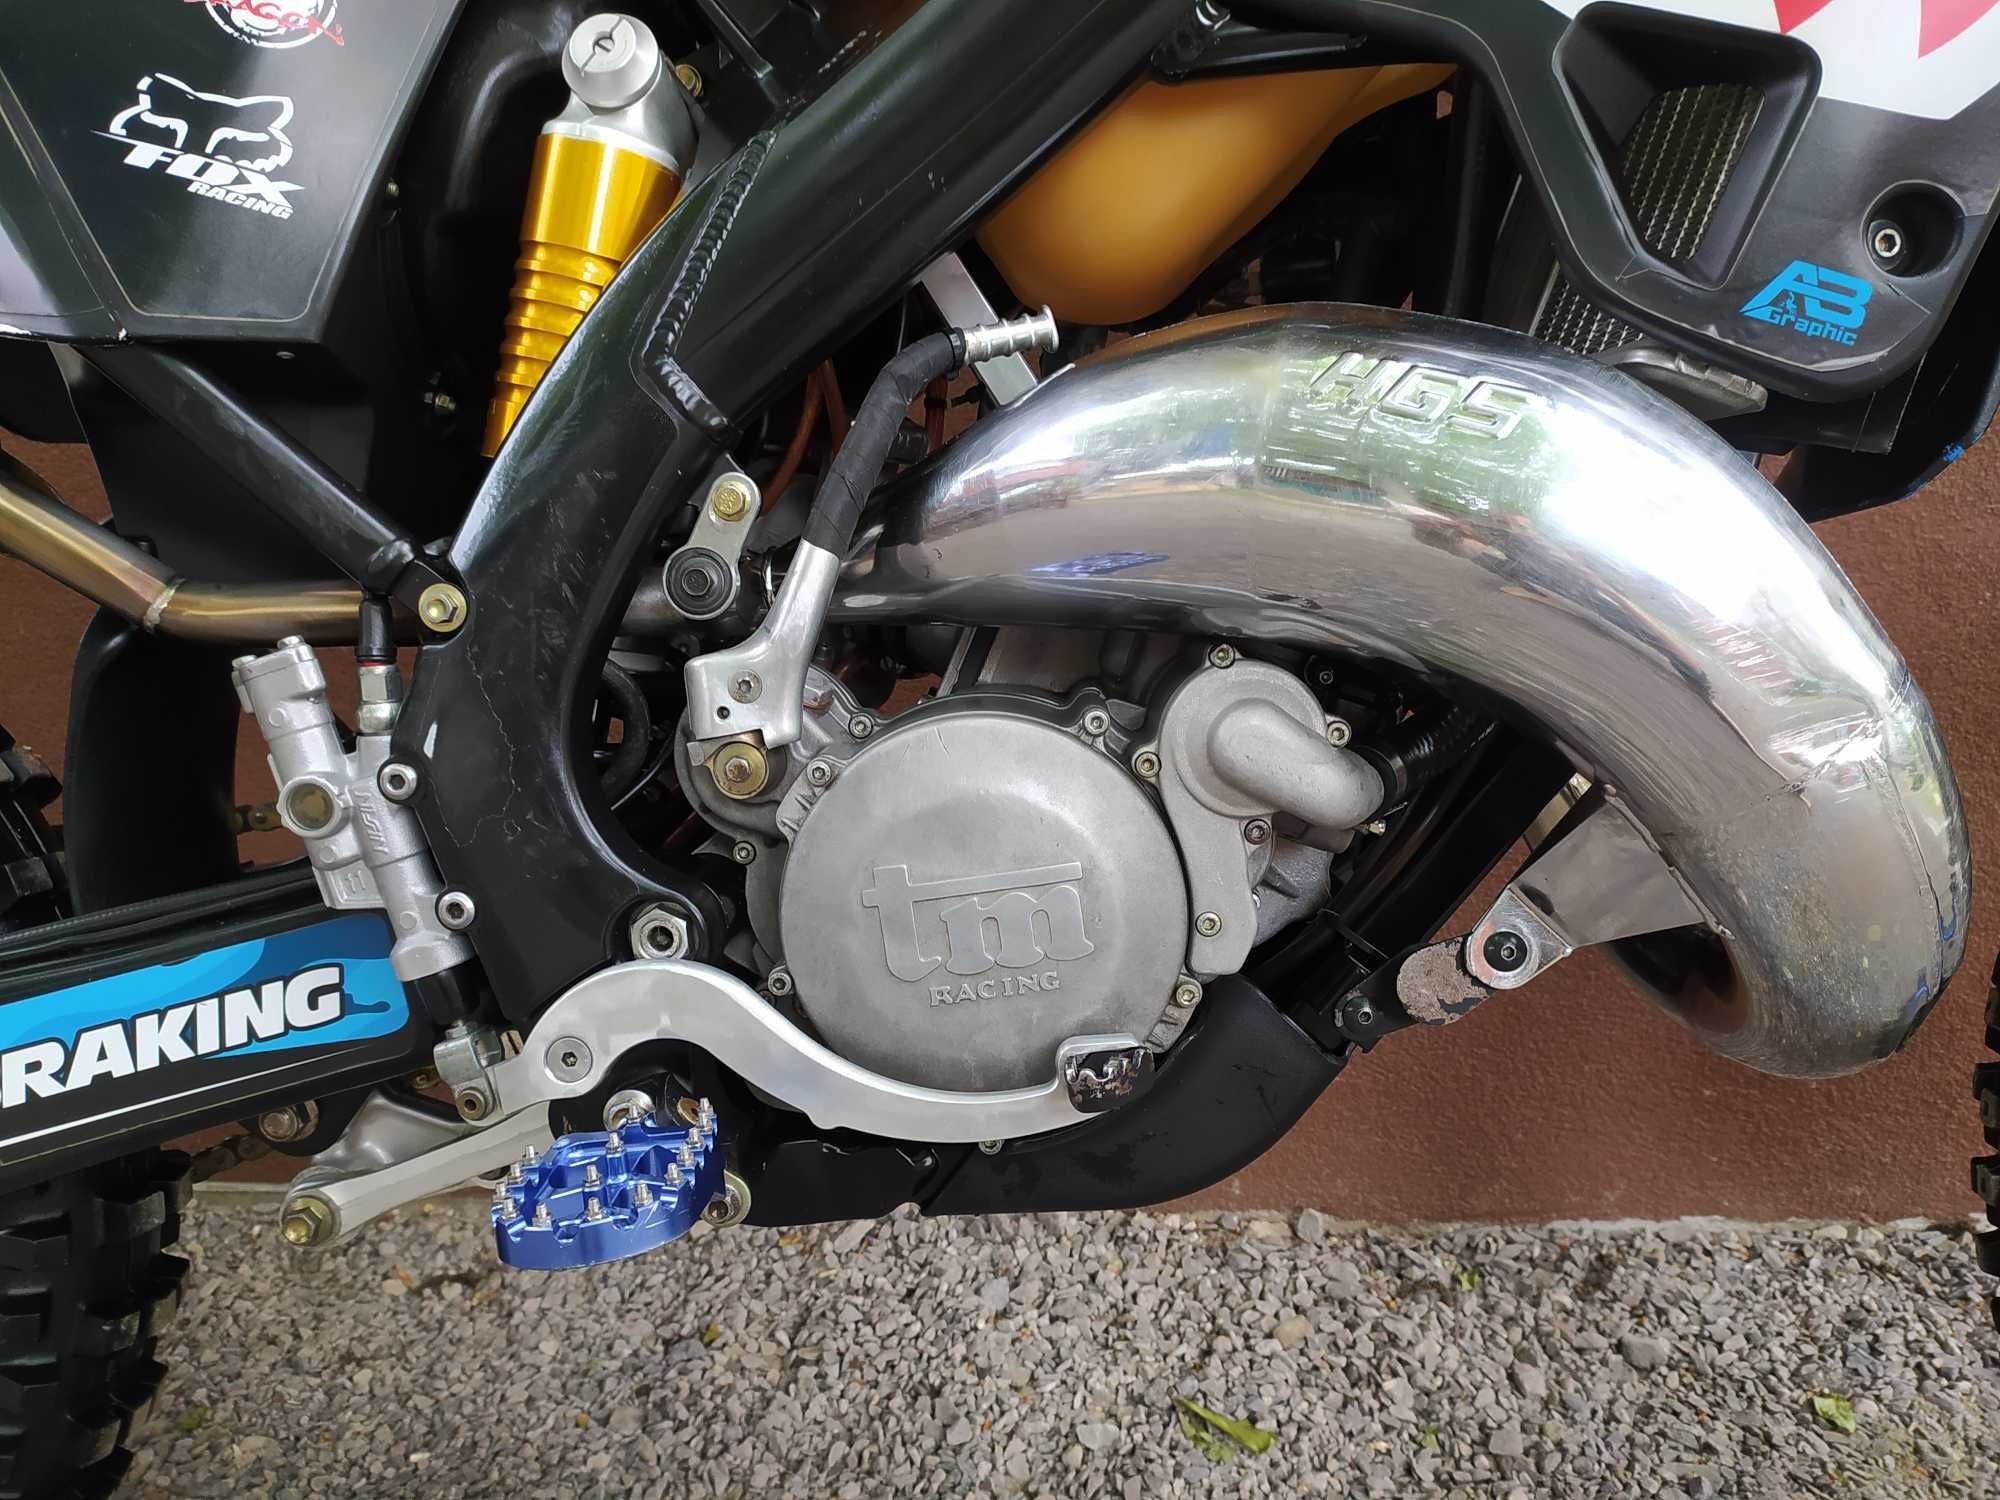 СРОЧНО  KTM exc 125 продам мотоцикл ендуро TM racing EN125   ktm